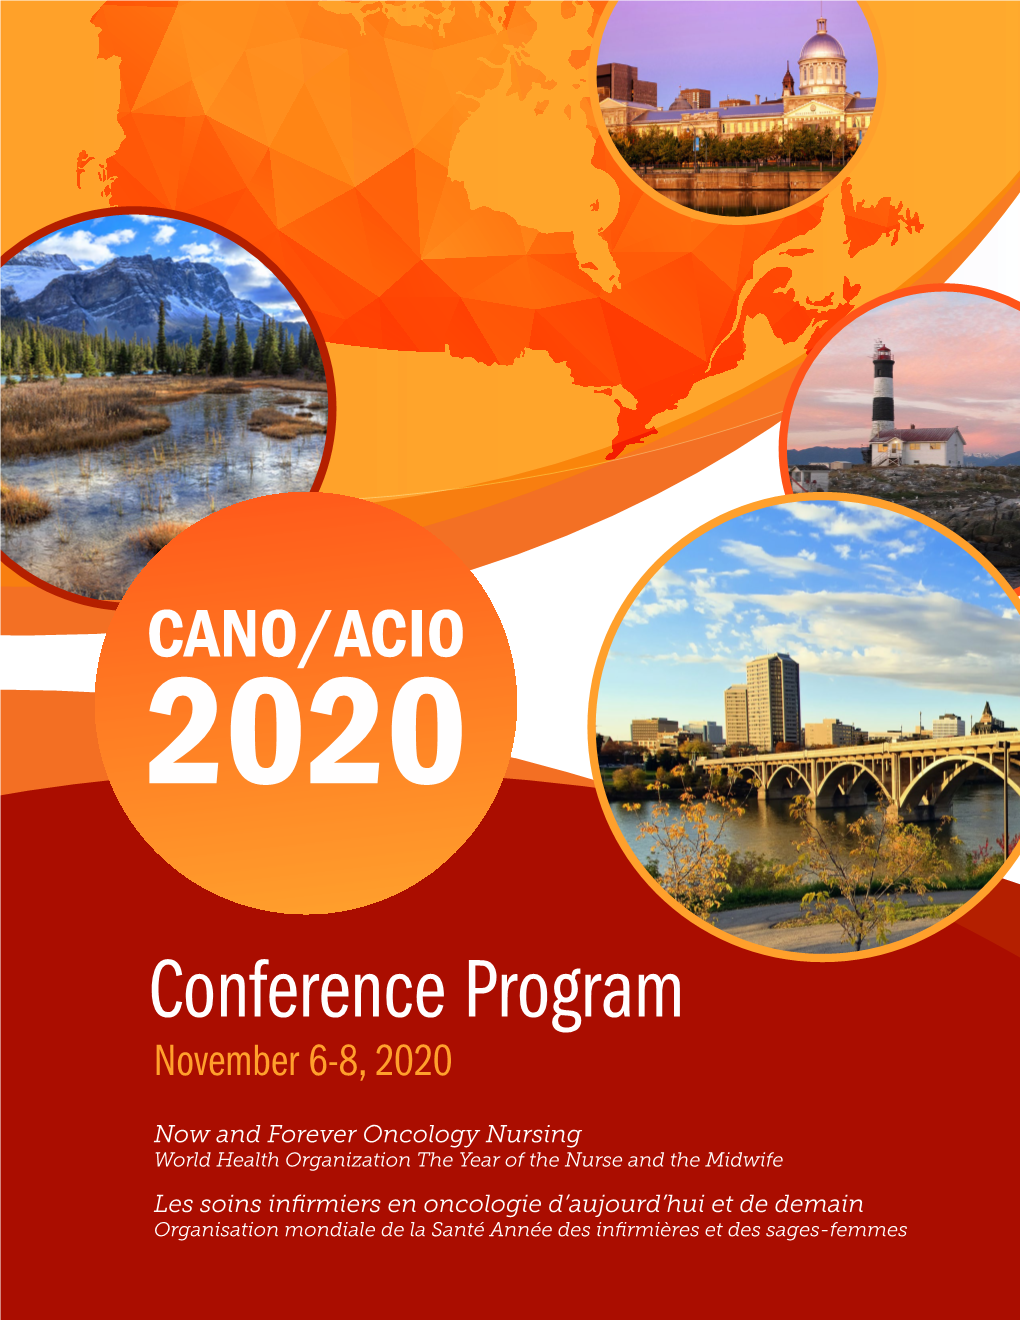 Conference Program November 6-8, 2020